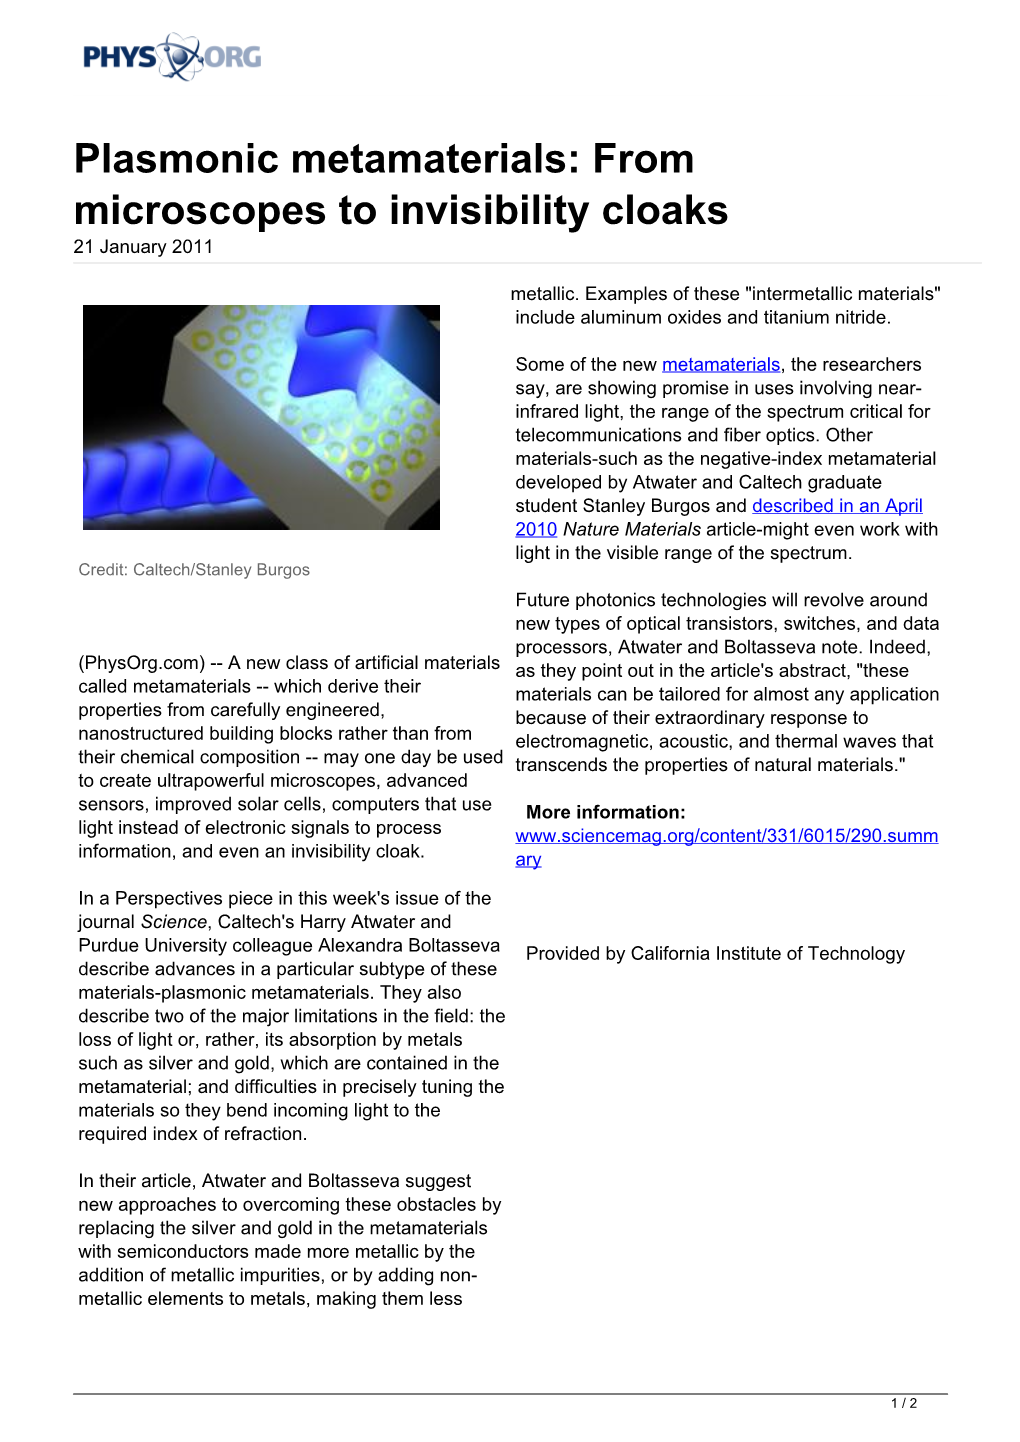 Plasmonic Metamaterials: from Microscopes to Invisibility Cloaks 21 January 2011